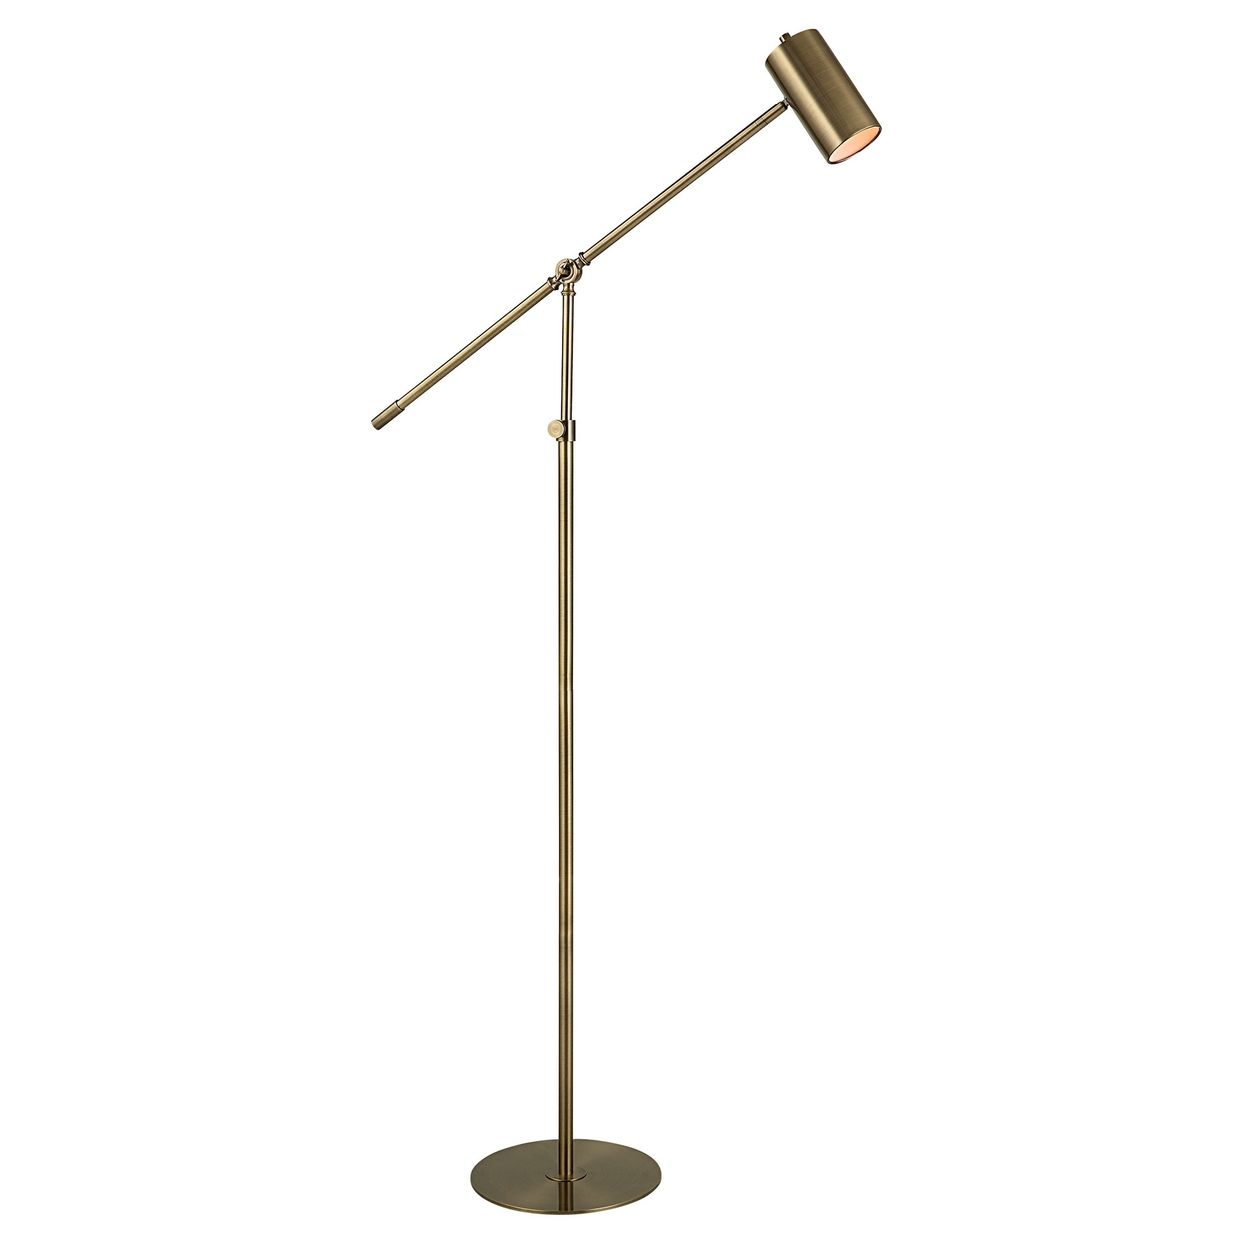 60 Inch Floor Lamp, Adjustable Length, Metal Shade, Antique Brass Finish -Saltoro Sherpi